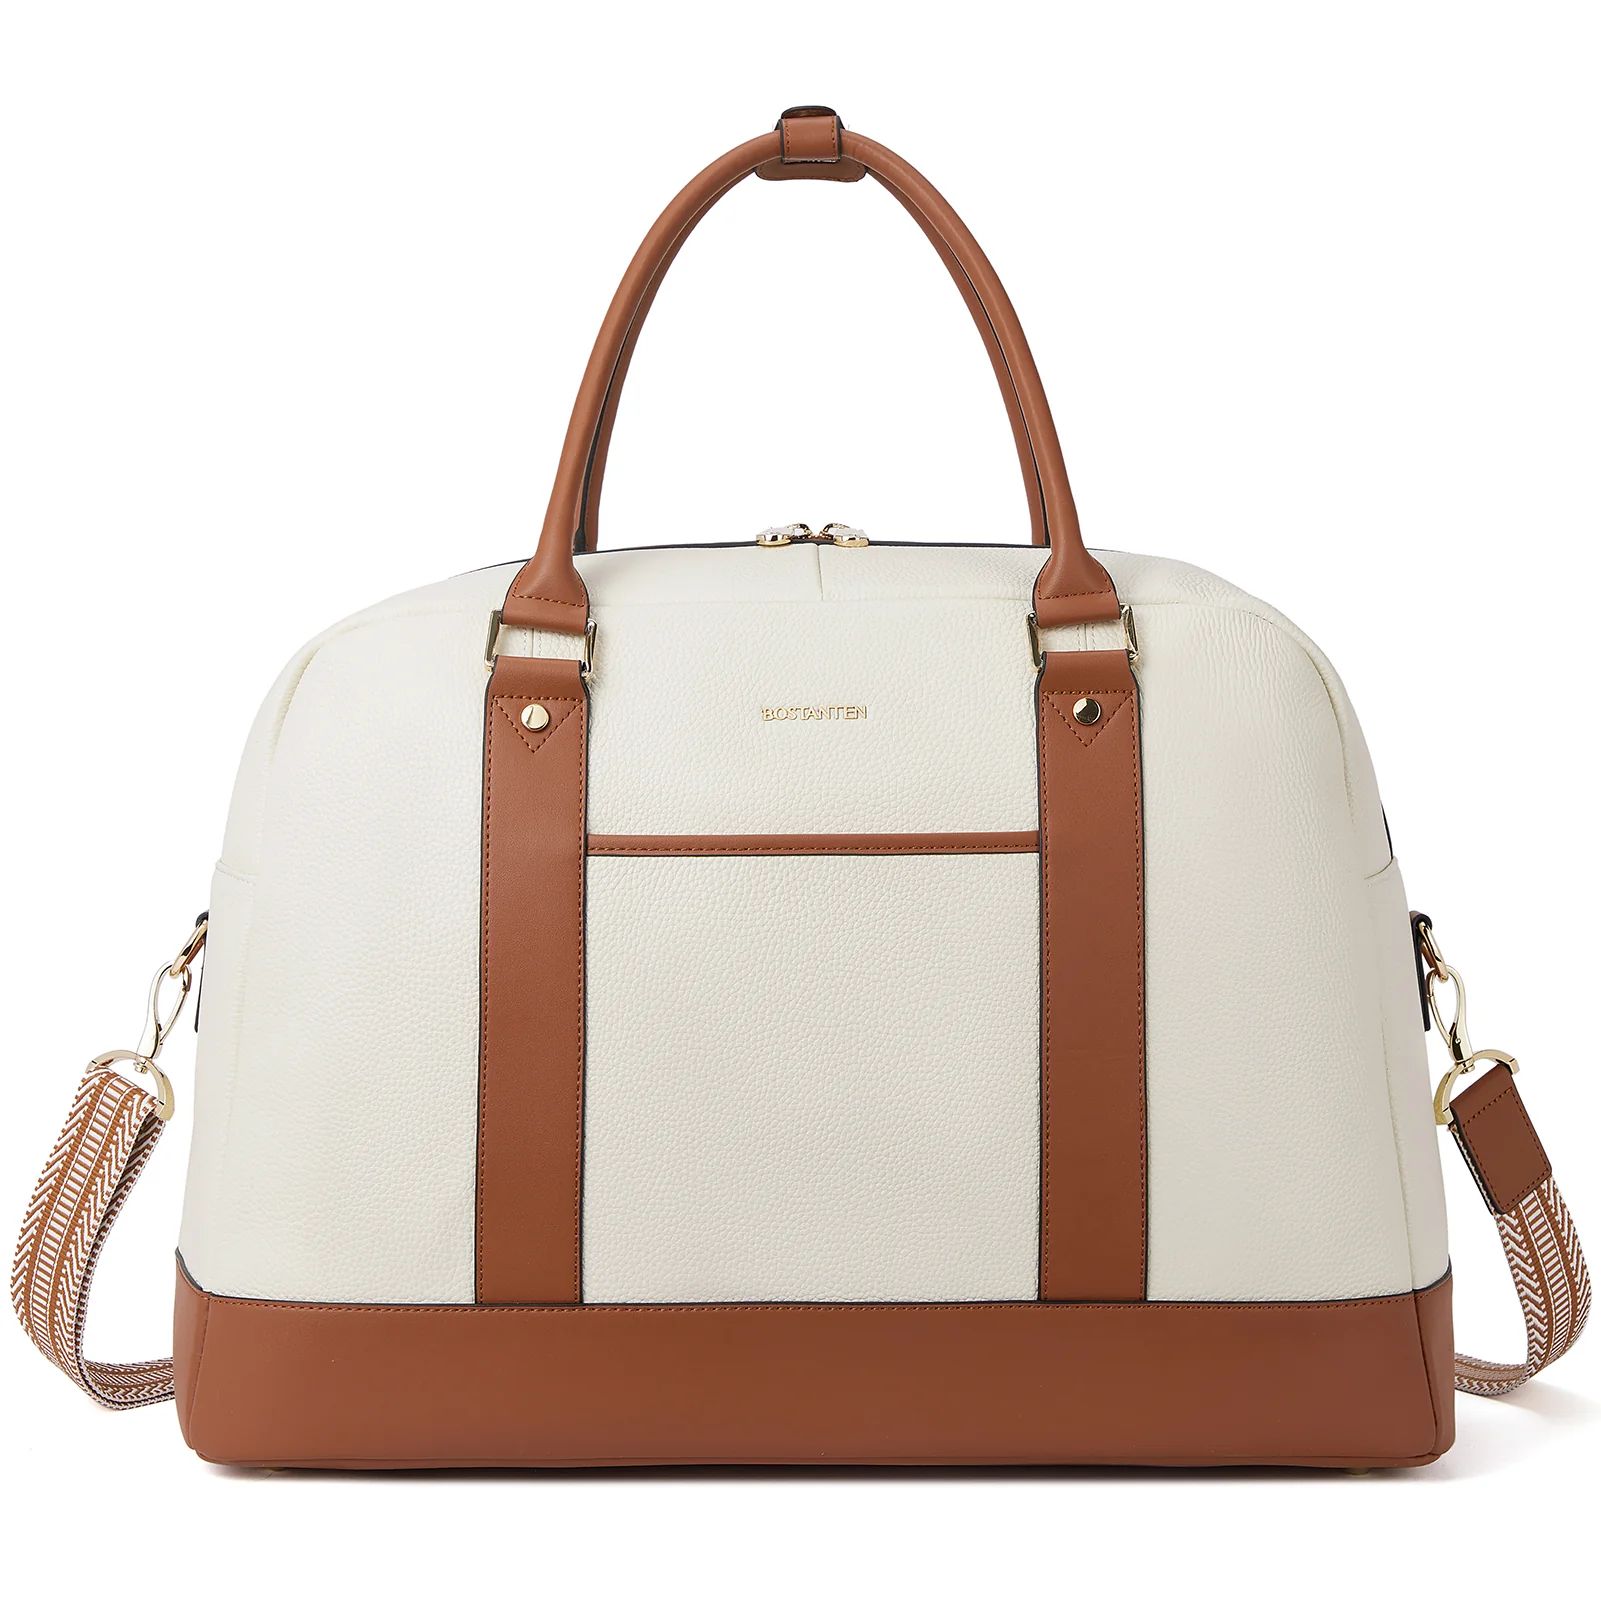 Zenobe Travel in Style: Women's Weekender Duffle Bag for the Fashion-Forward | Bostanten